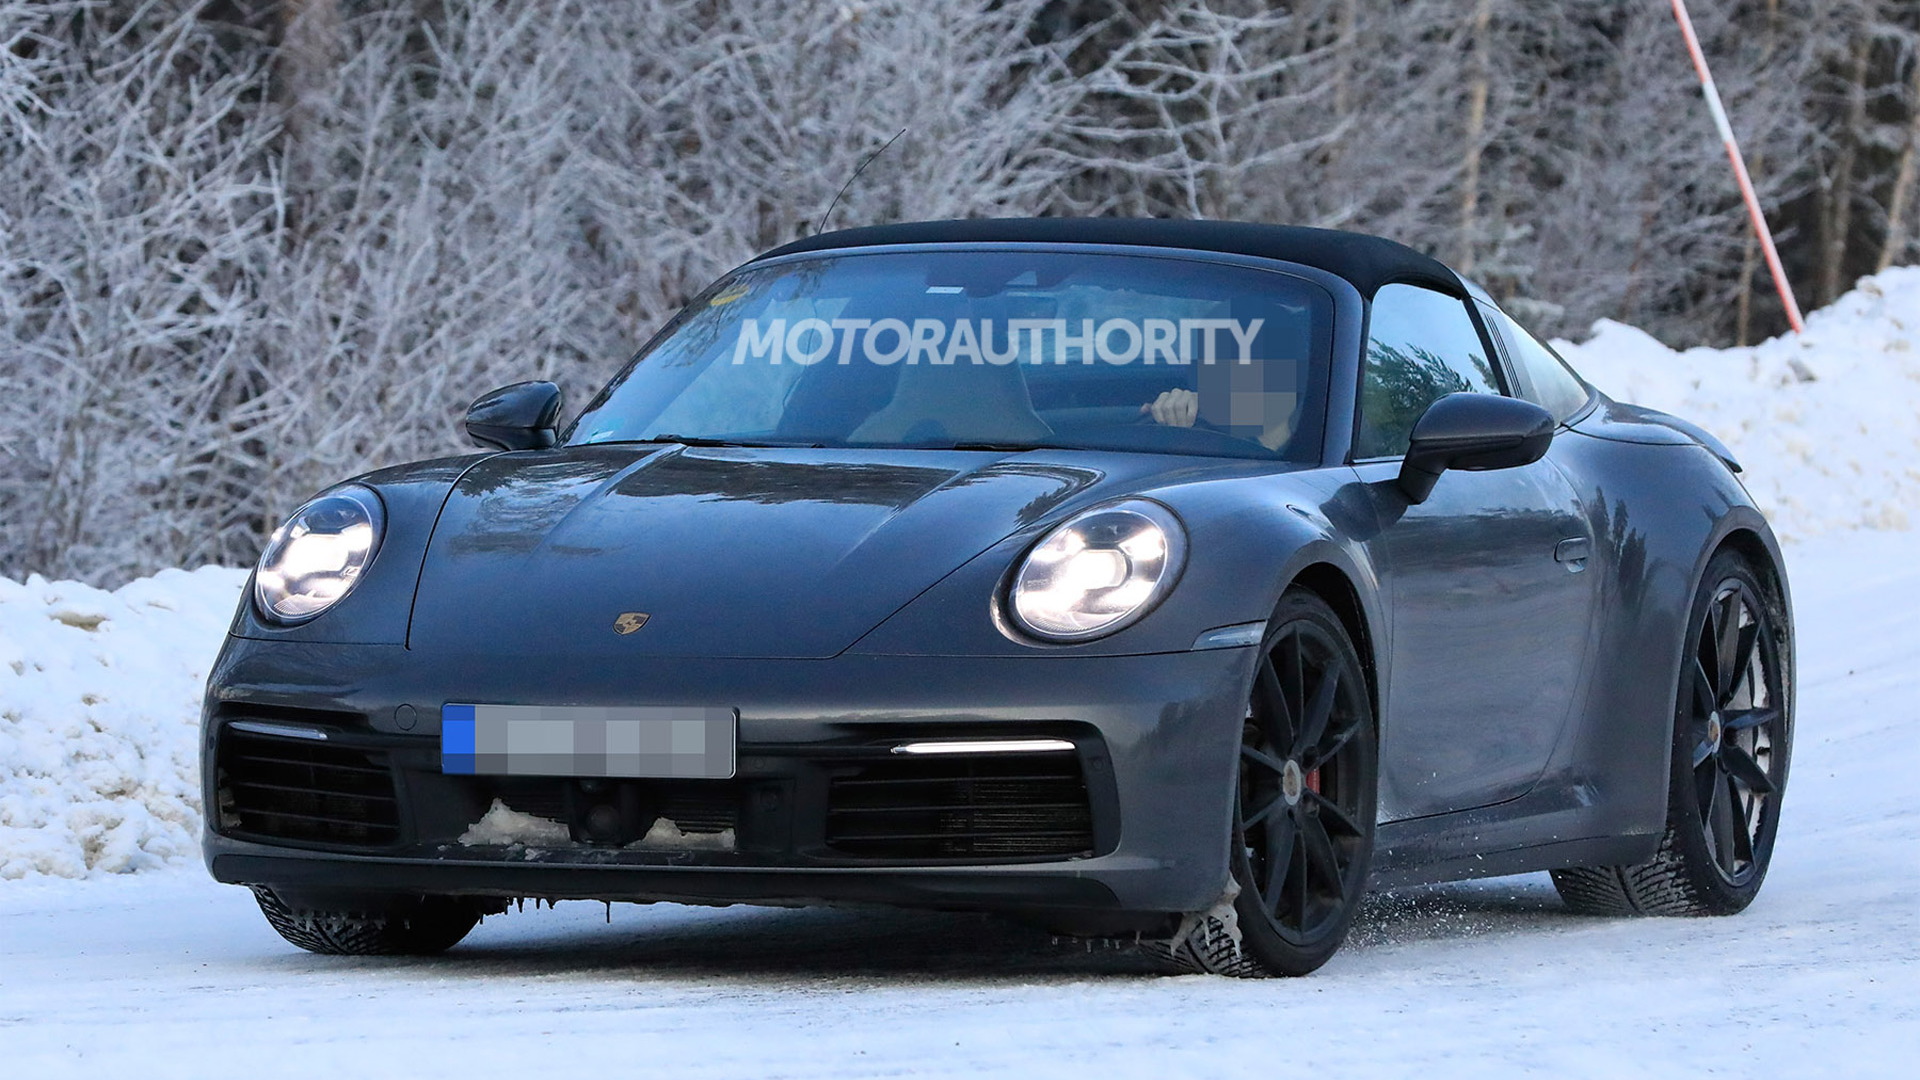 2021 Porsche 911 Targa spy shots - Photo credit: S. Baldauf/SB-Medien